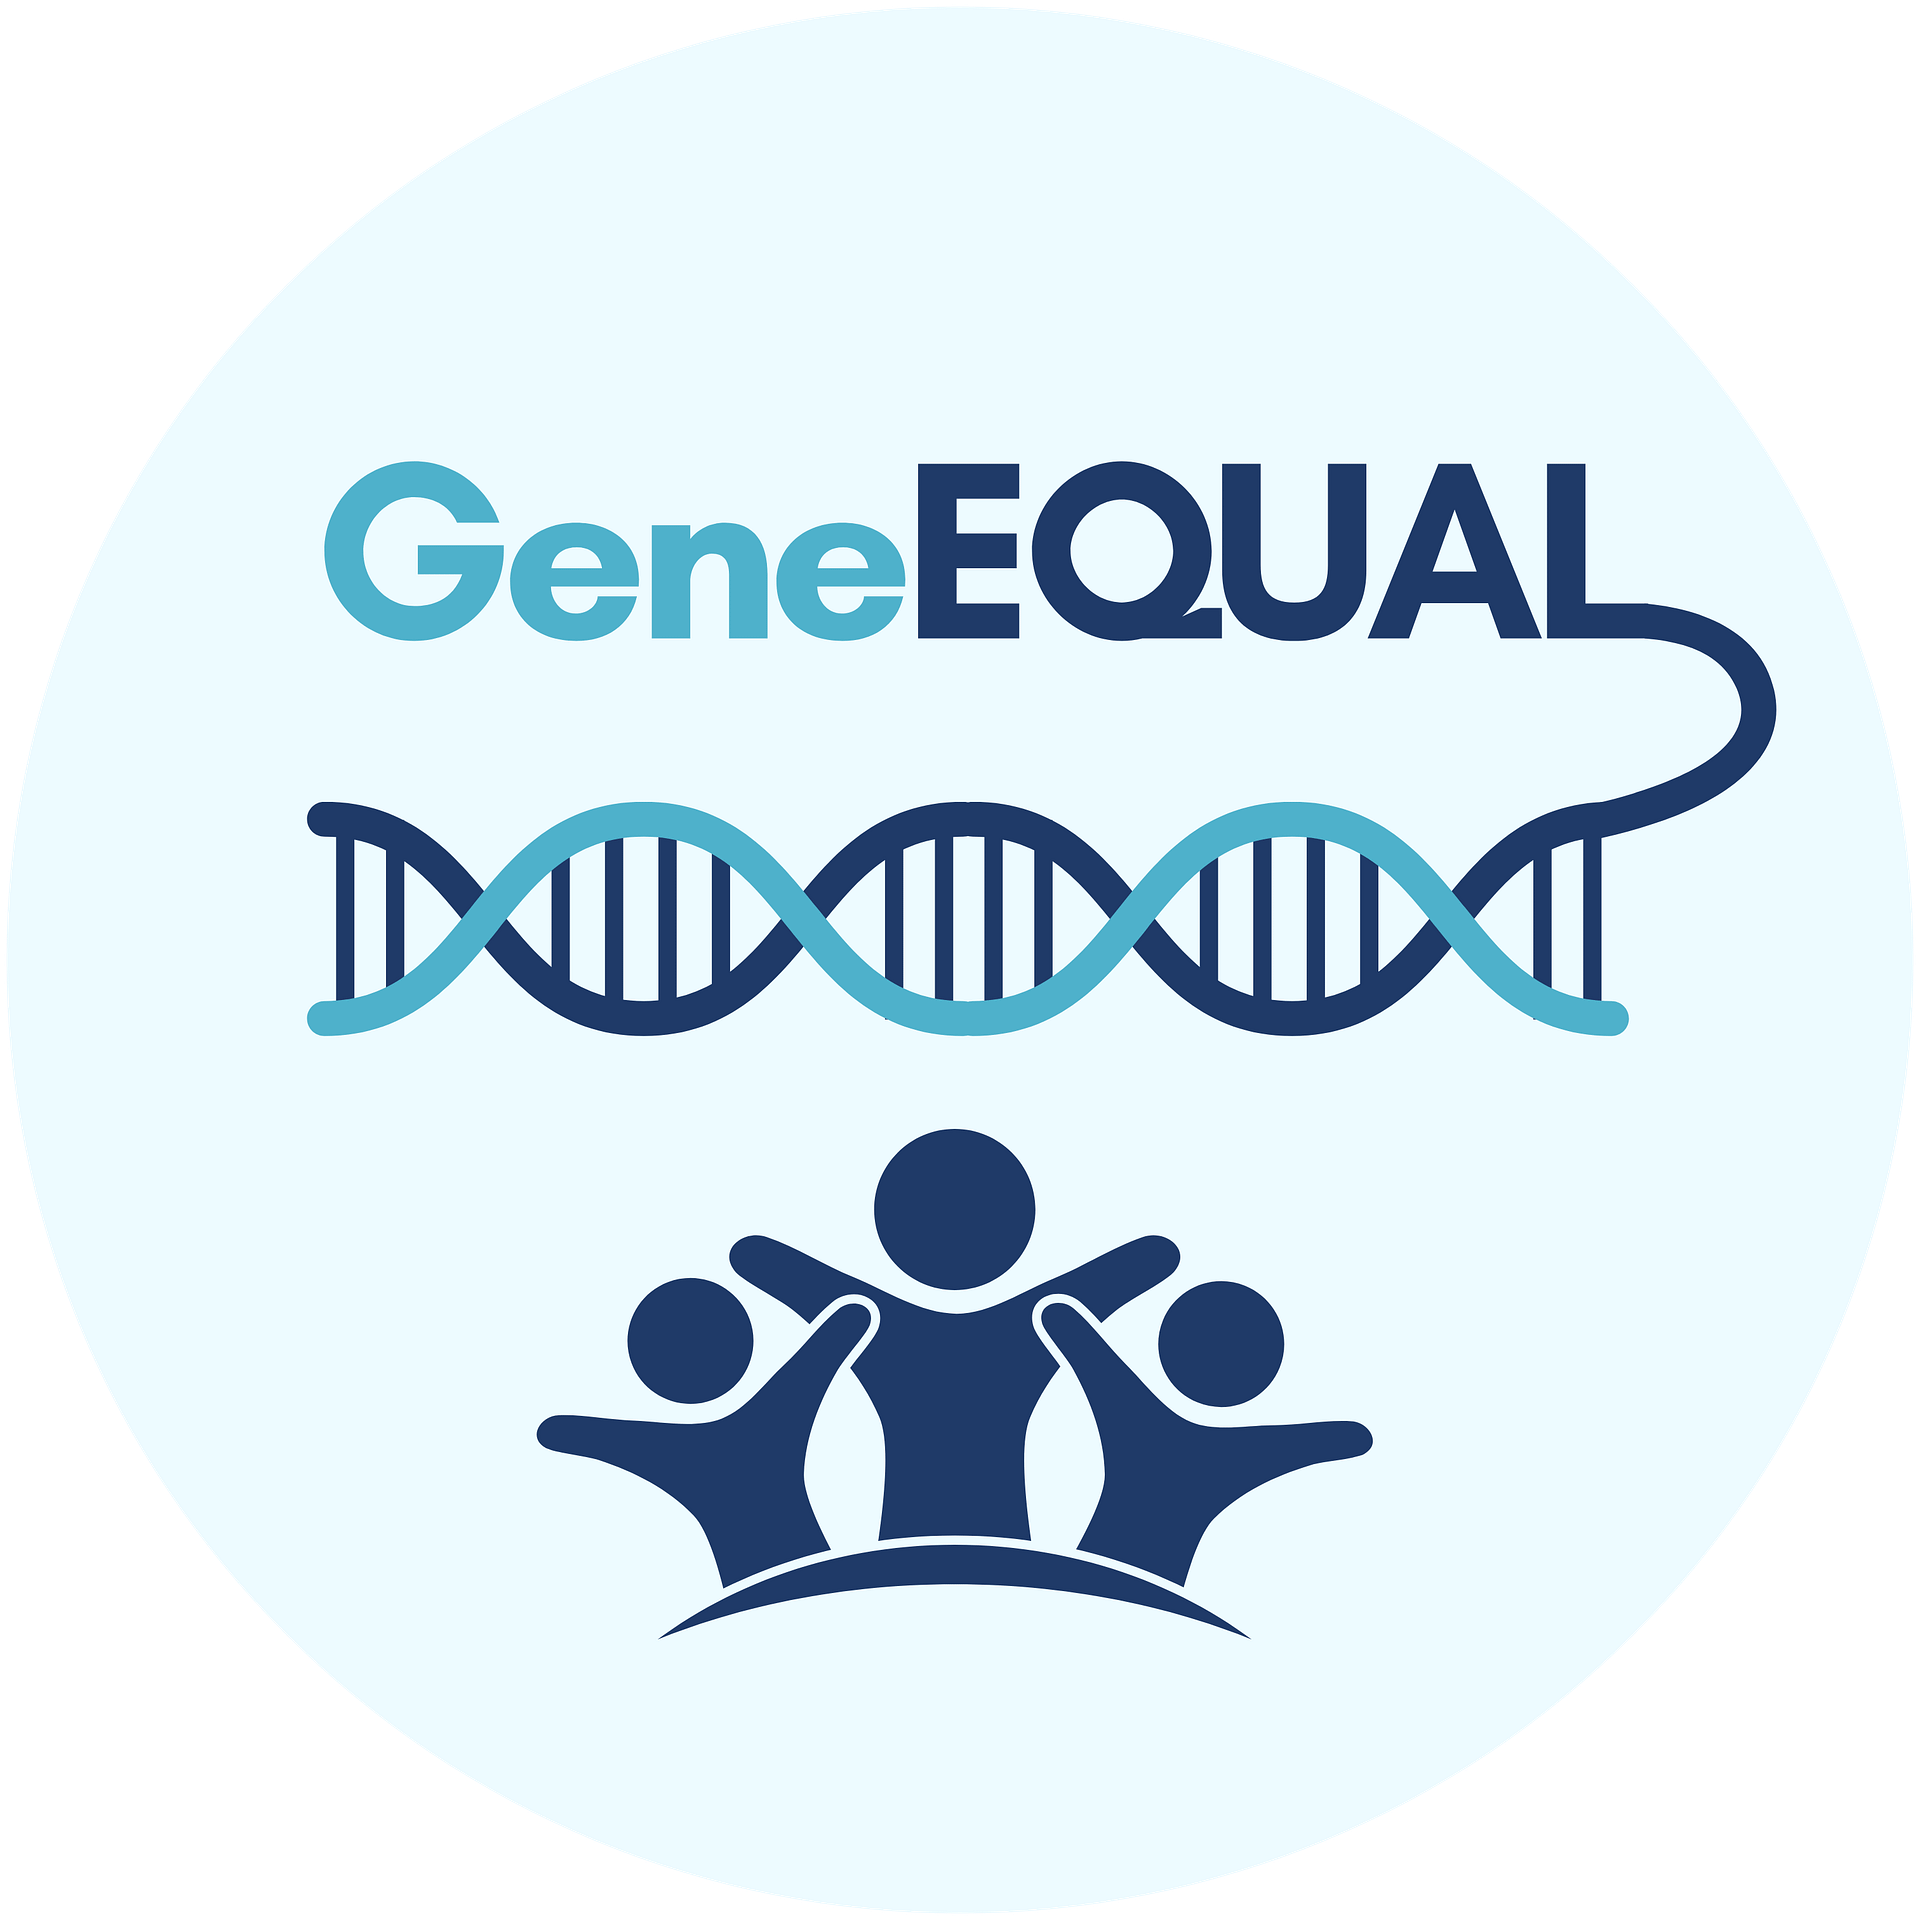 Gene equal logo